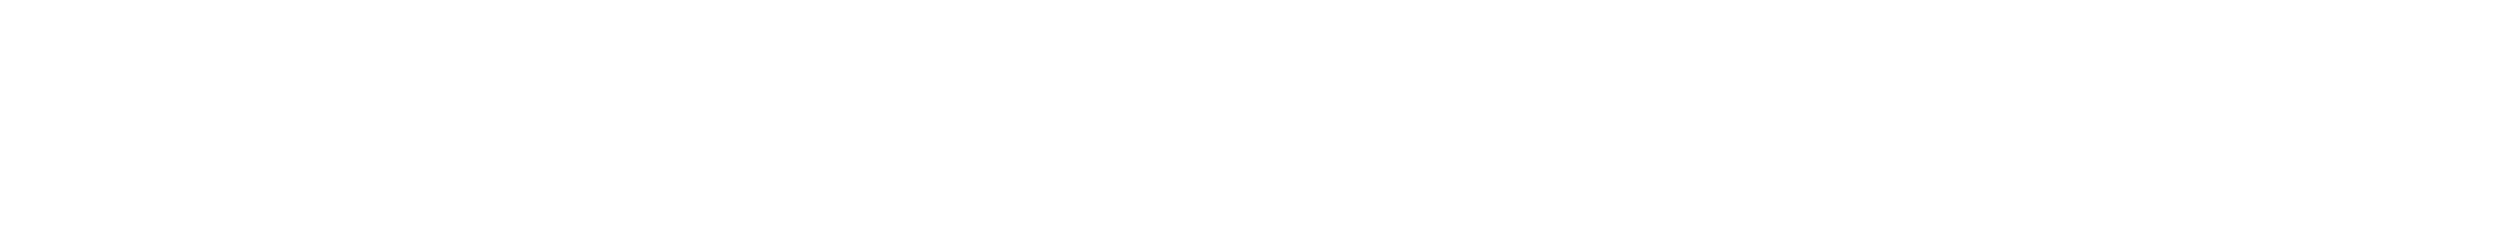 Divider logo image at Villa Vita Apartments in Peoria, Arizona